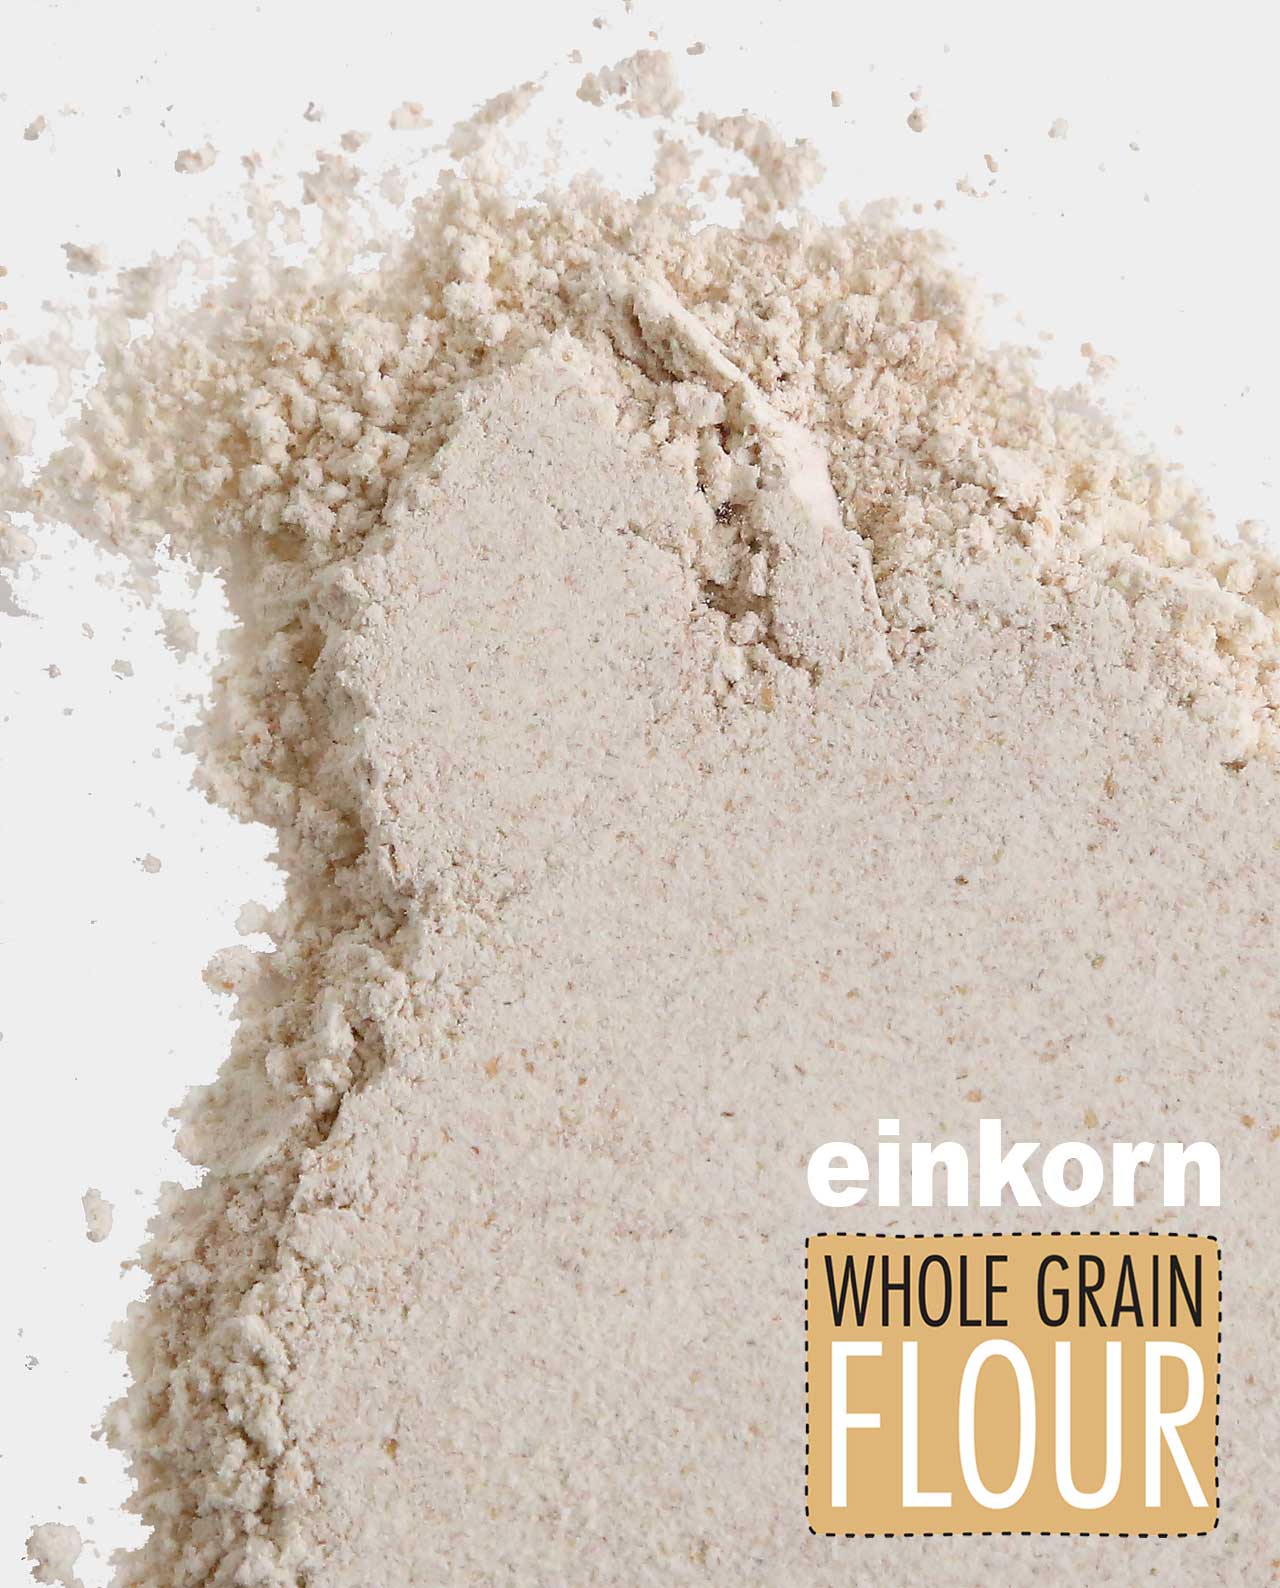 https://breadtopia.com/wp-content/uploads/2014/06/BT-einkorn-WG-flour.jpg